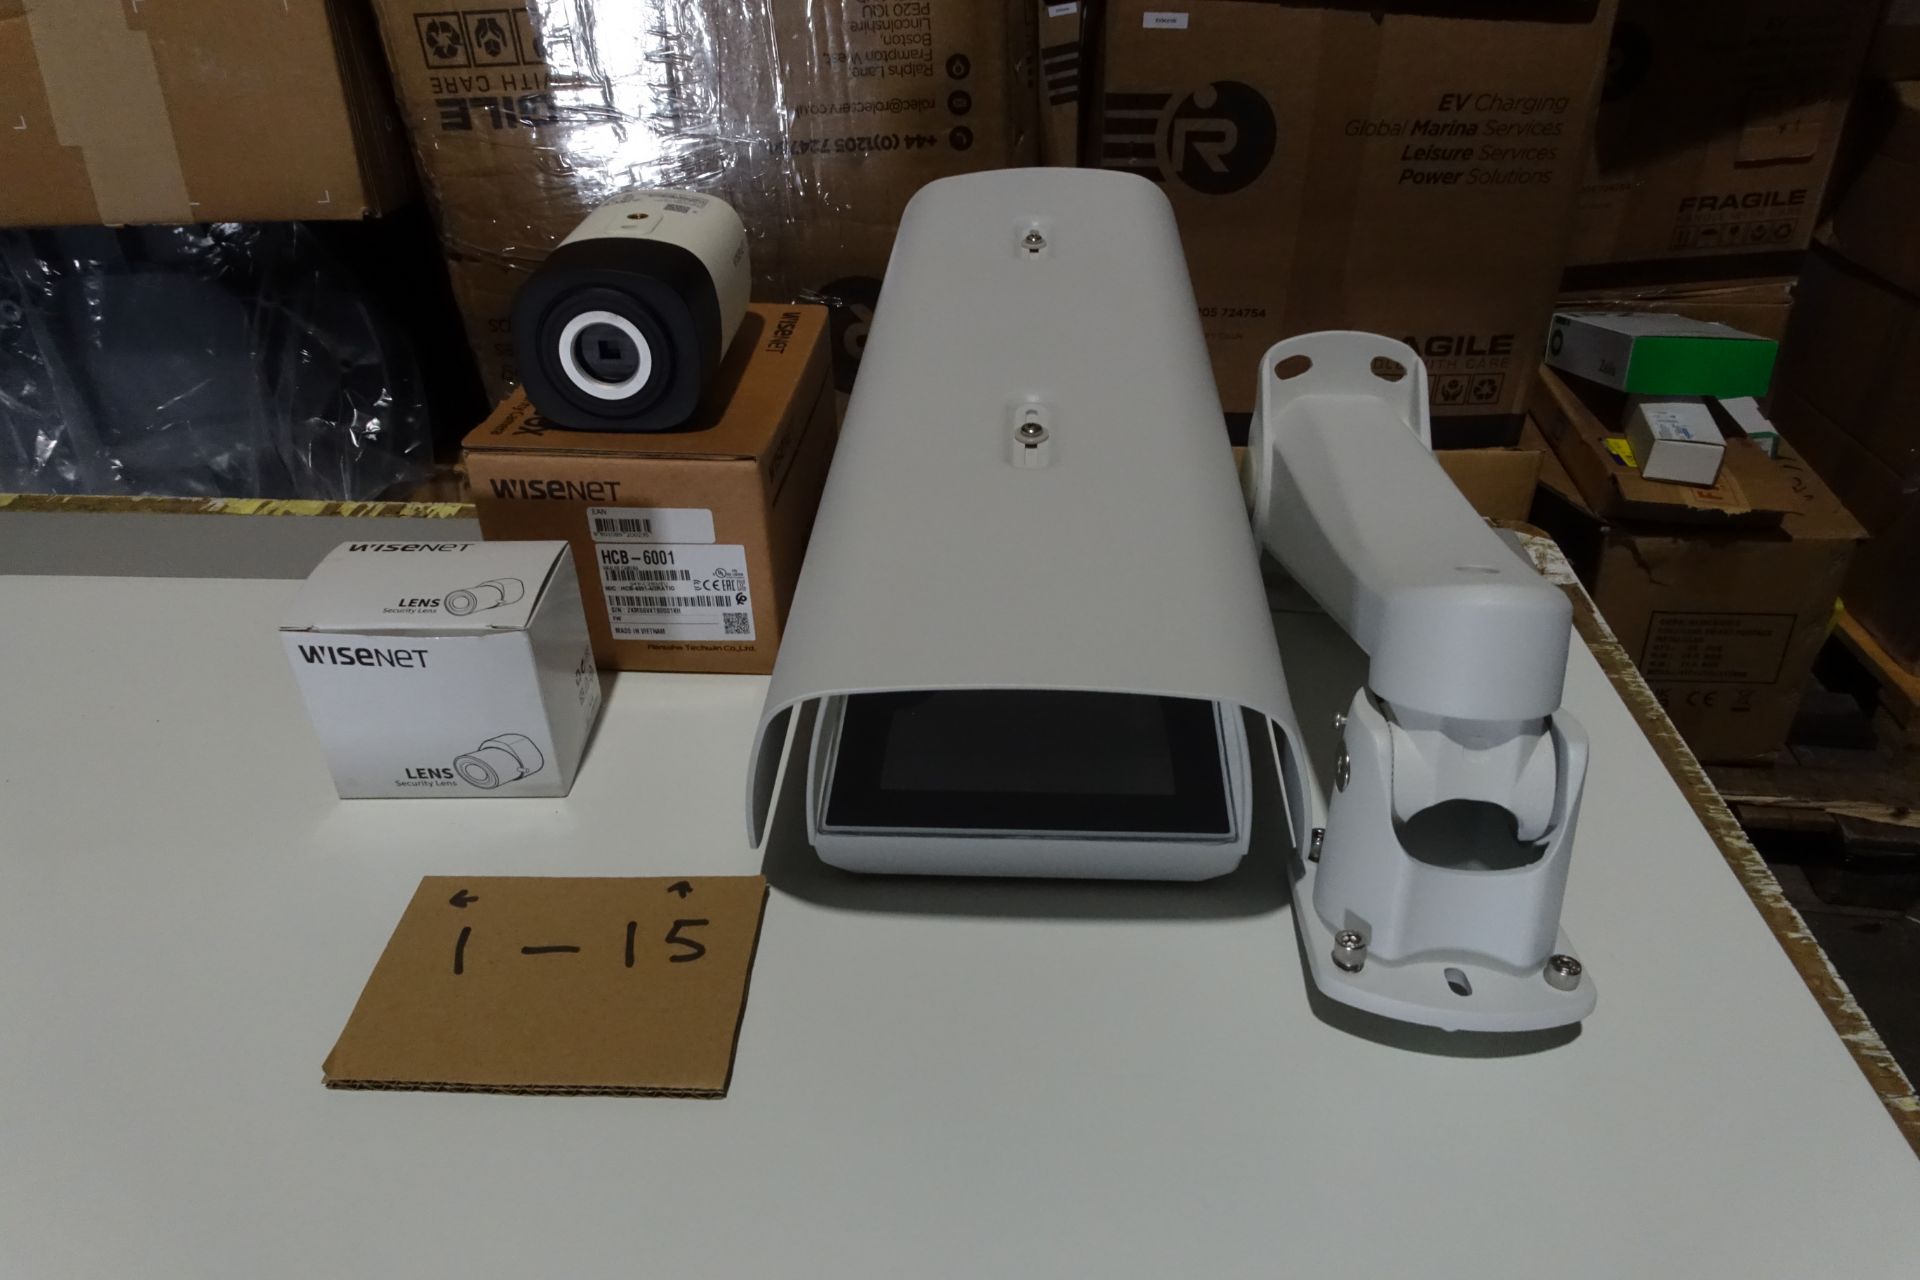 1x Wisenet SHB -4300H Outdoor Box Camera Housing, 1 x Wisenet HCB - 6001 Security Camera Indoor 1920